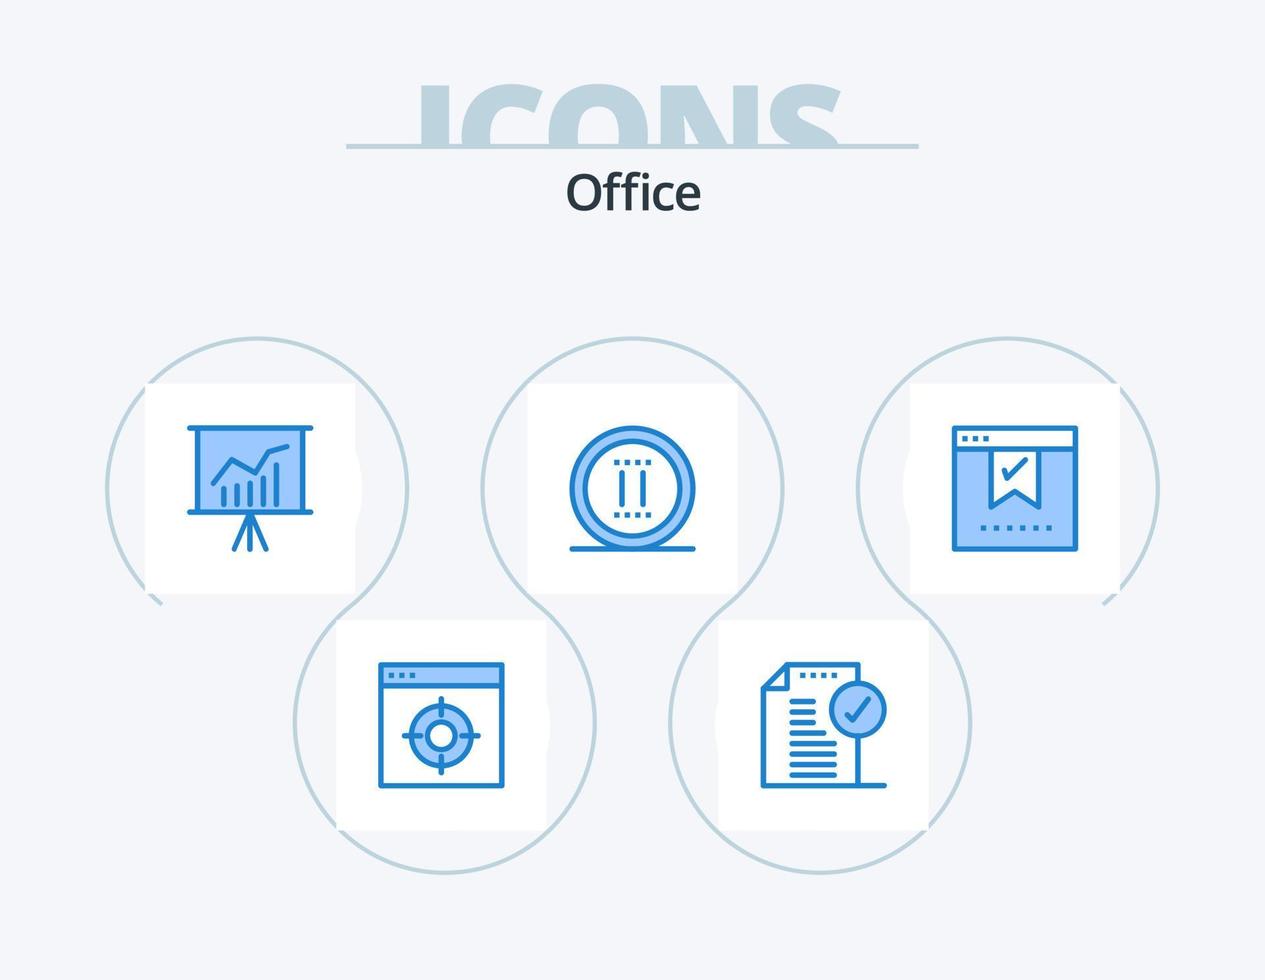 paquete de iconos azul de oficina 5 diseño de iconos. marcador. en línea. oficina. oficina. presentación vector